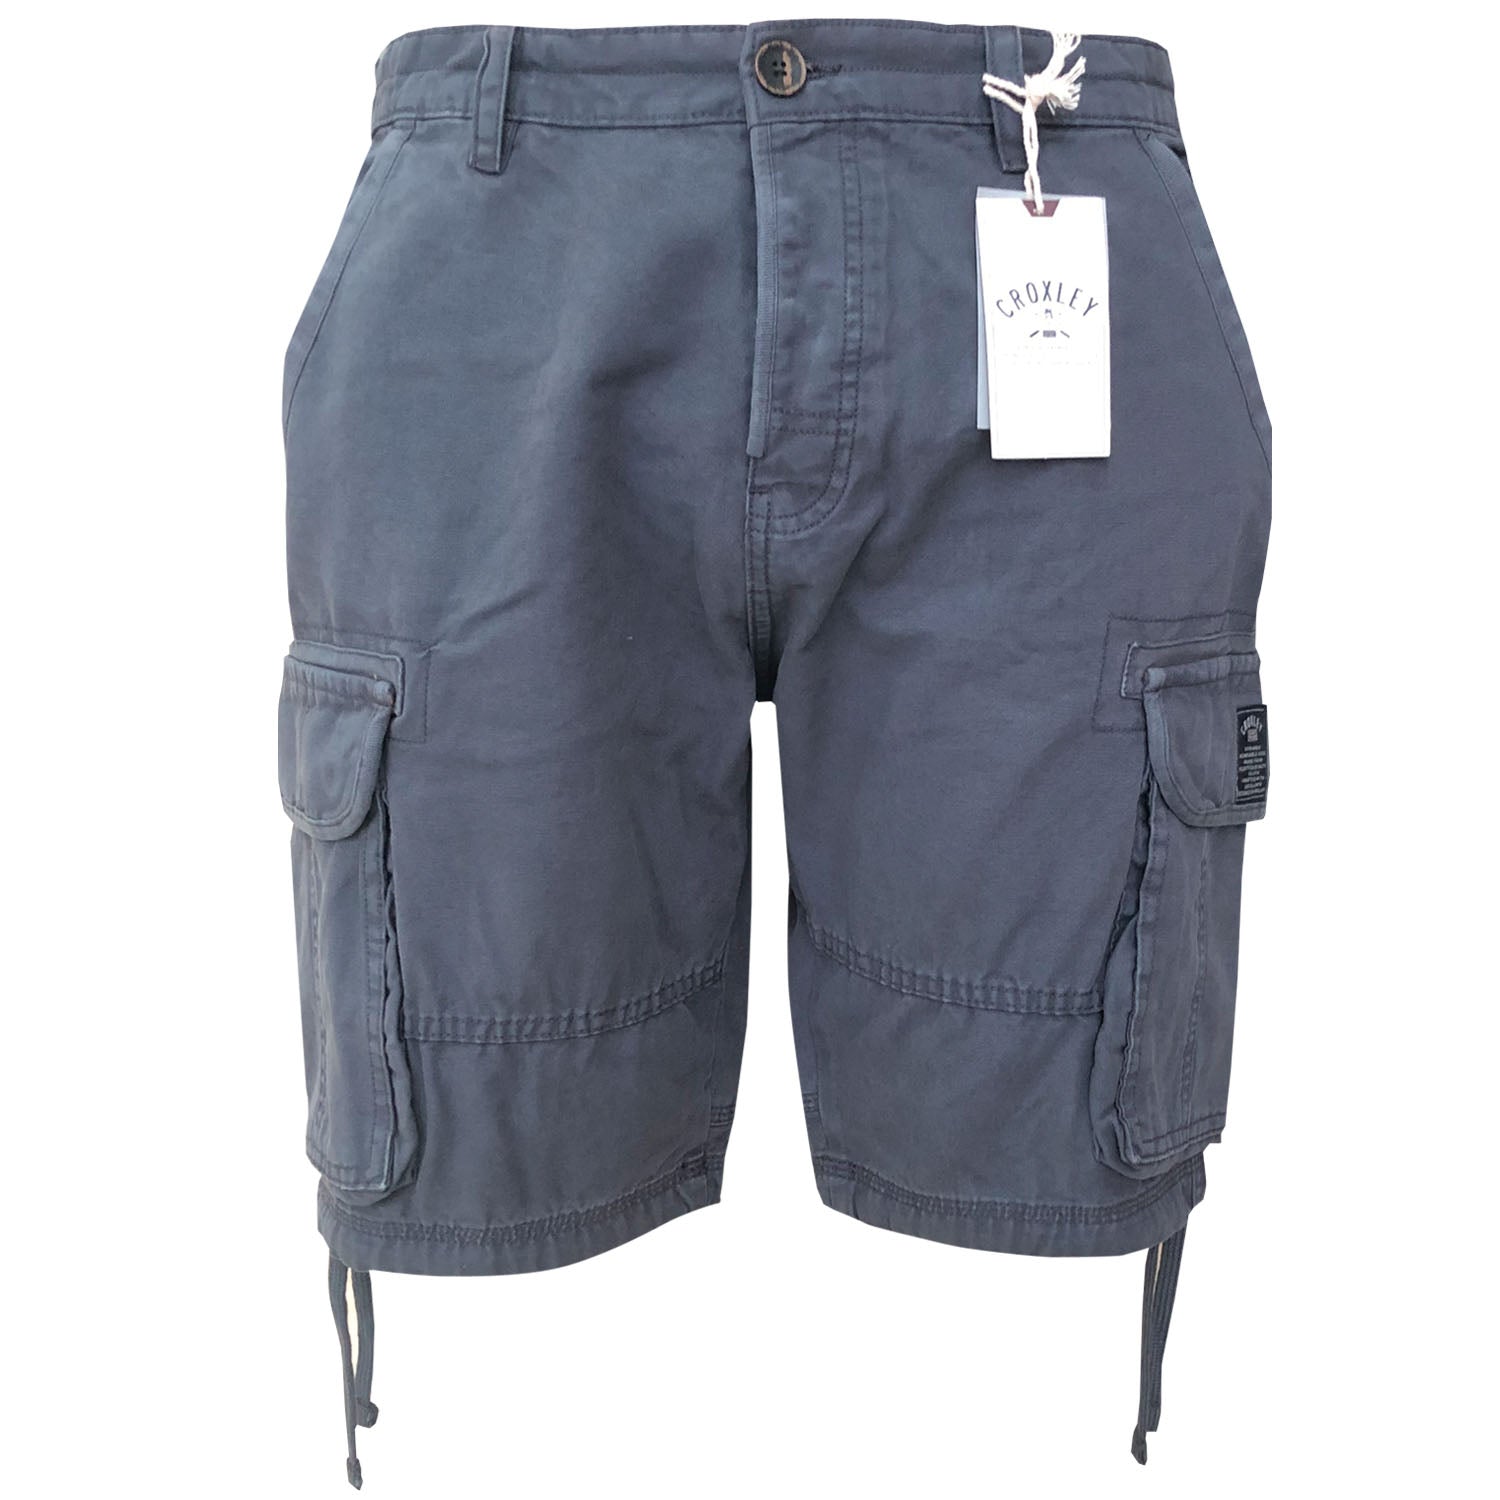 Croxley - Cargo Shorts - LabelledUp.com